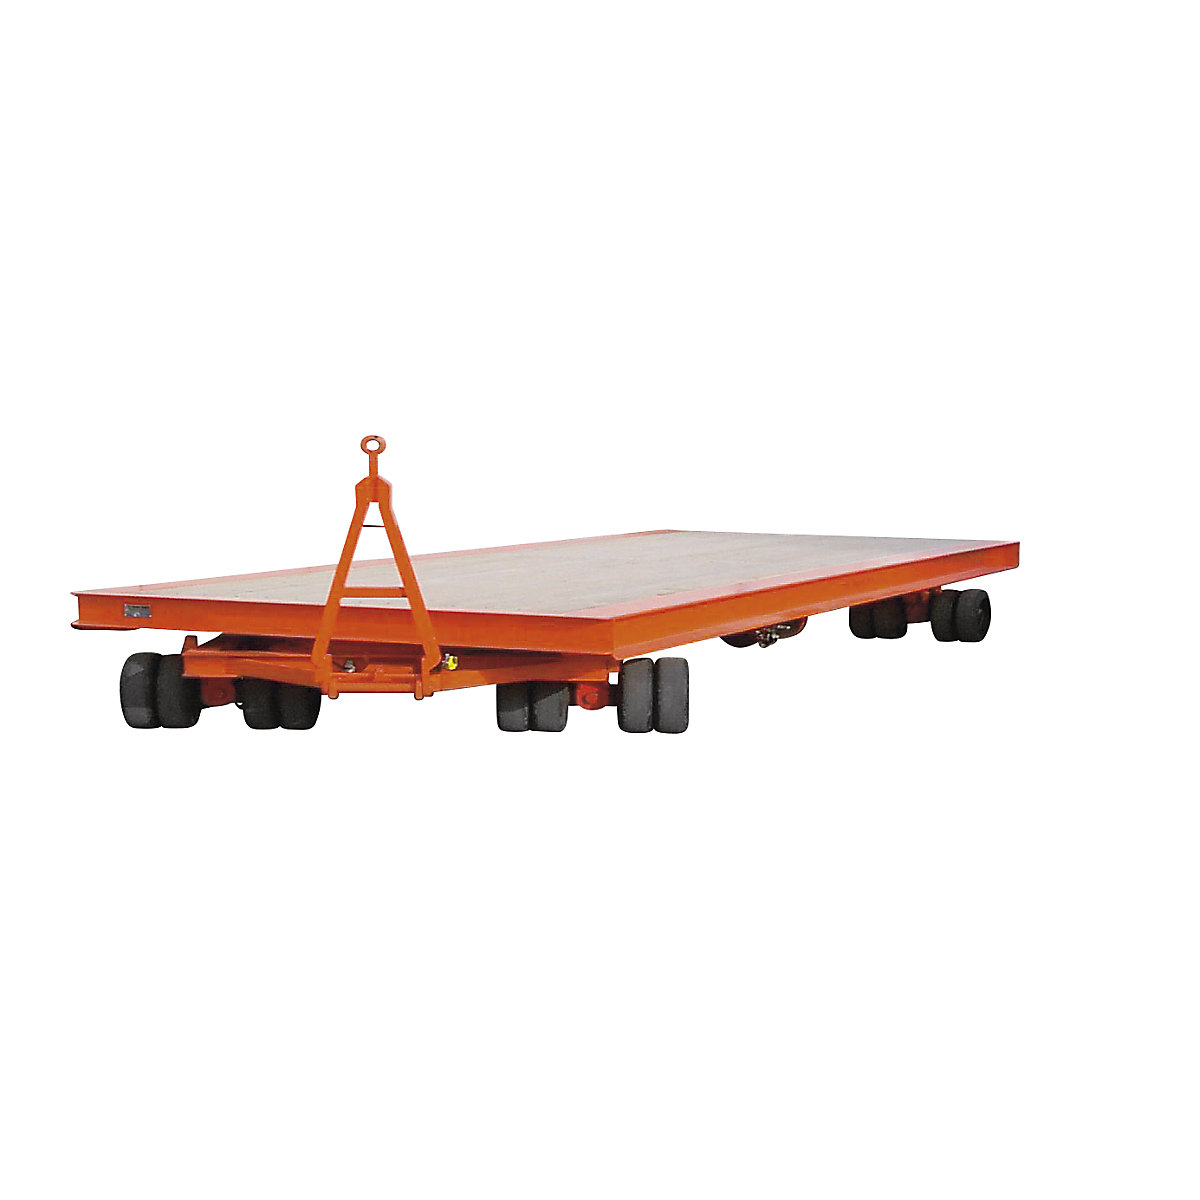 Heavy goods trailer, 25 t, turntable steering, platform 4.0 x 2.0 m